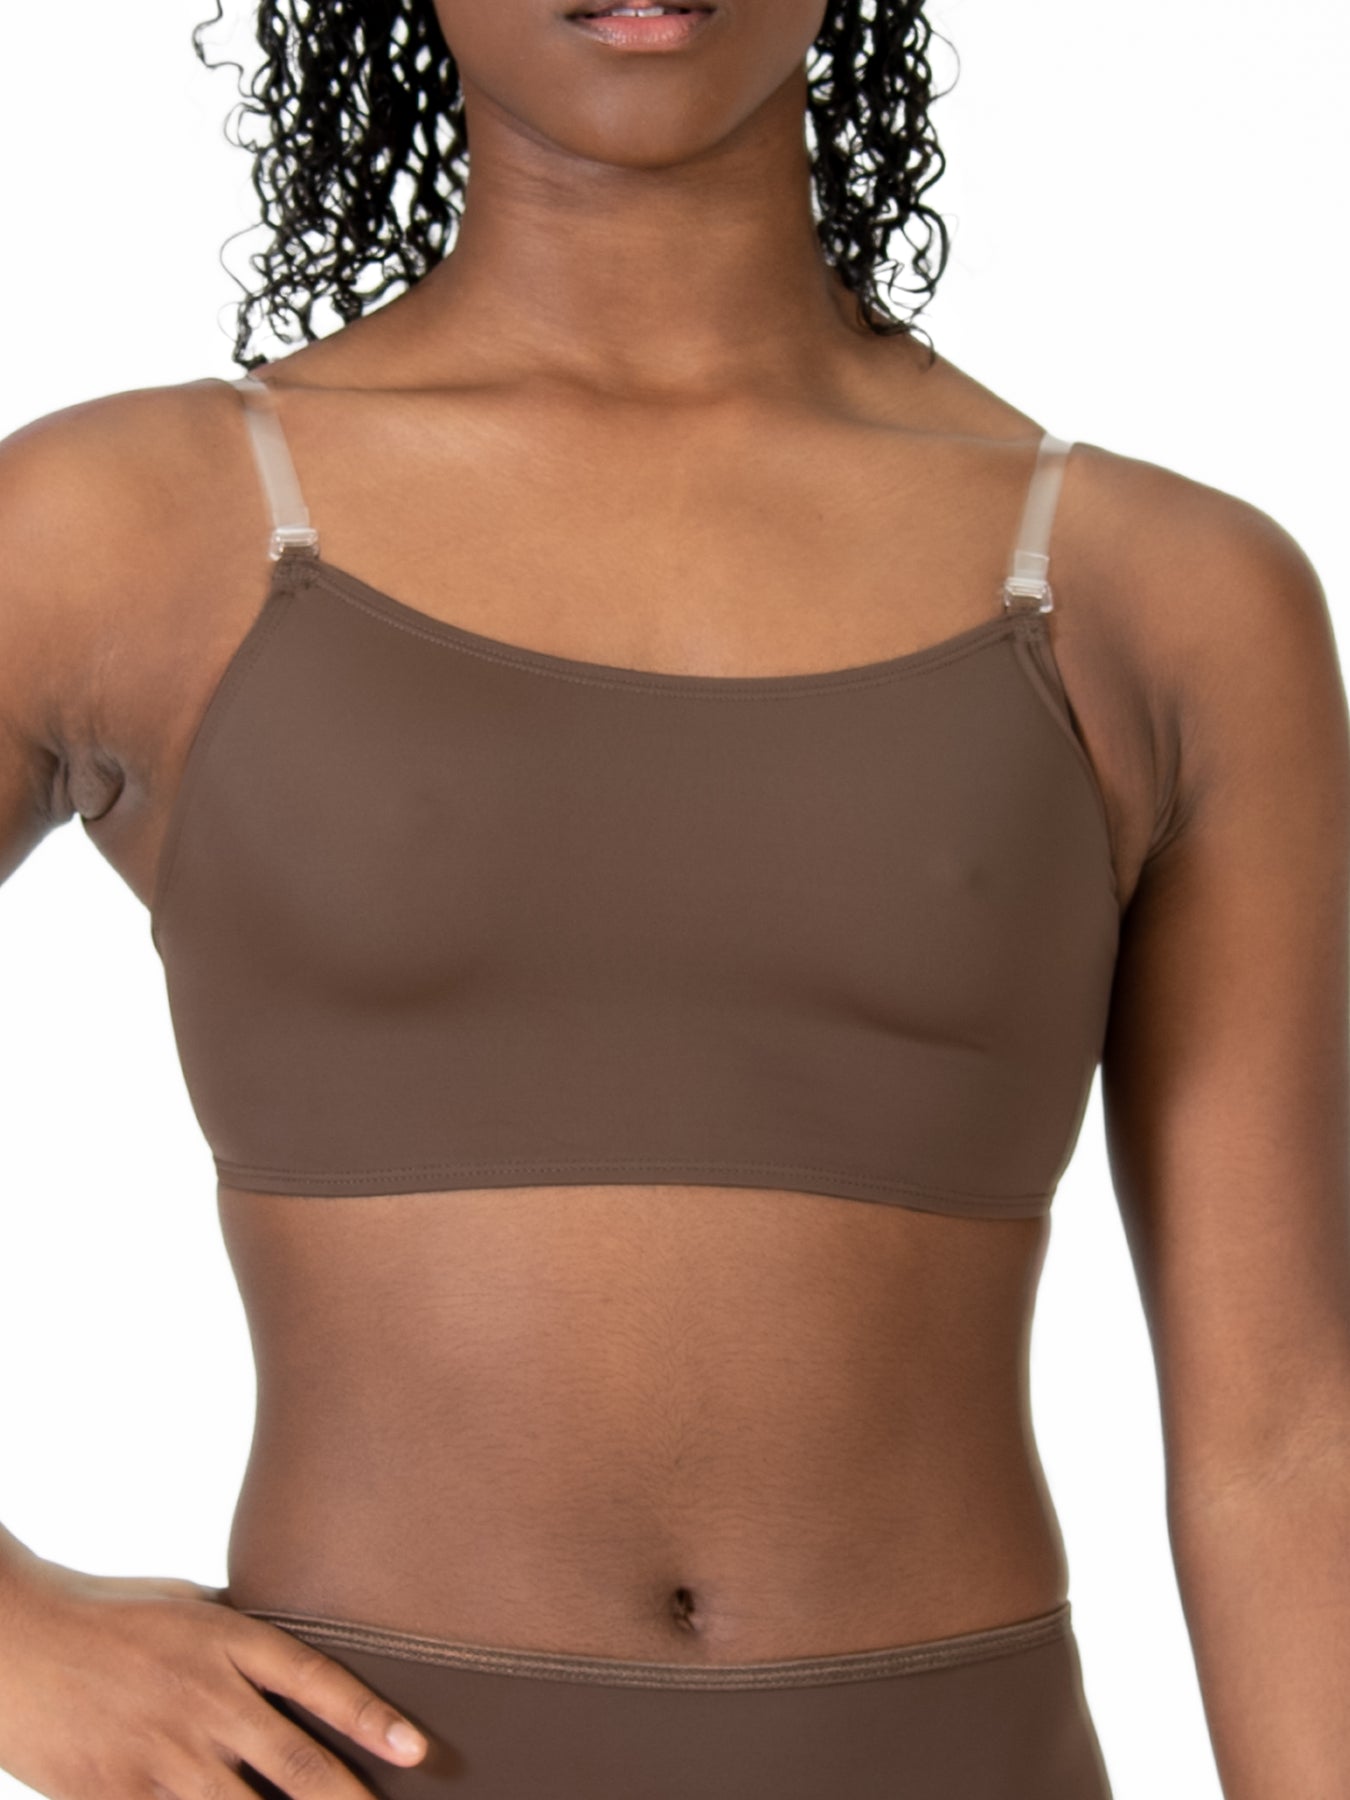 Body Wrappers 0275 Clear Strap Convertible Bra - Child – Dancewear